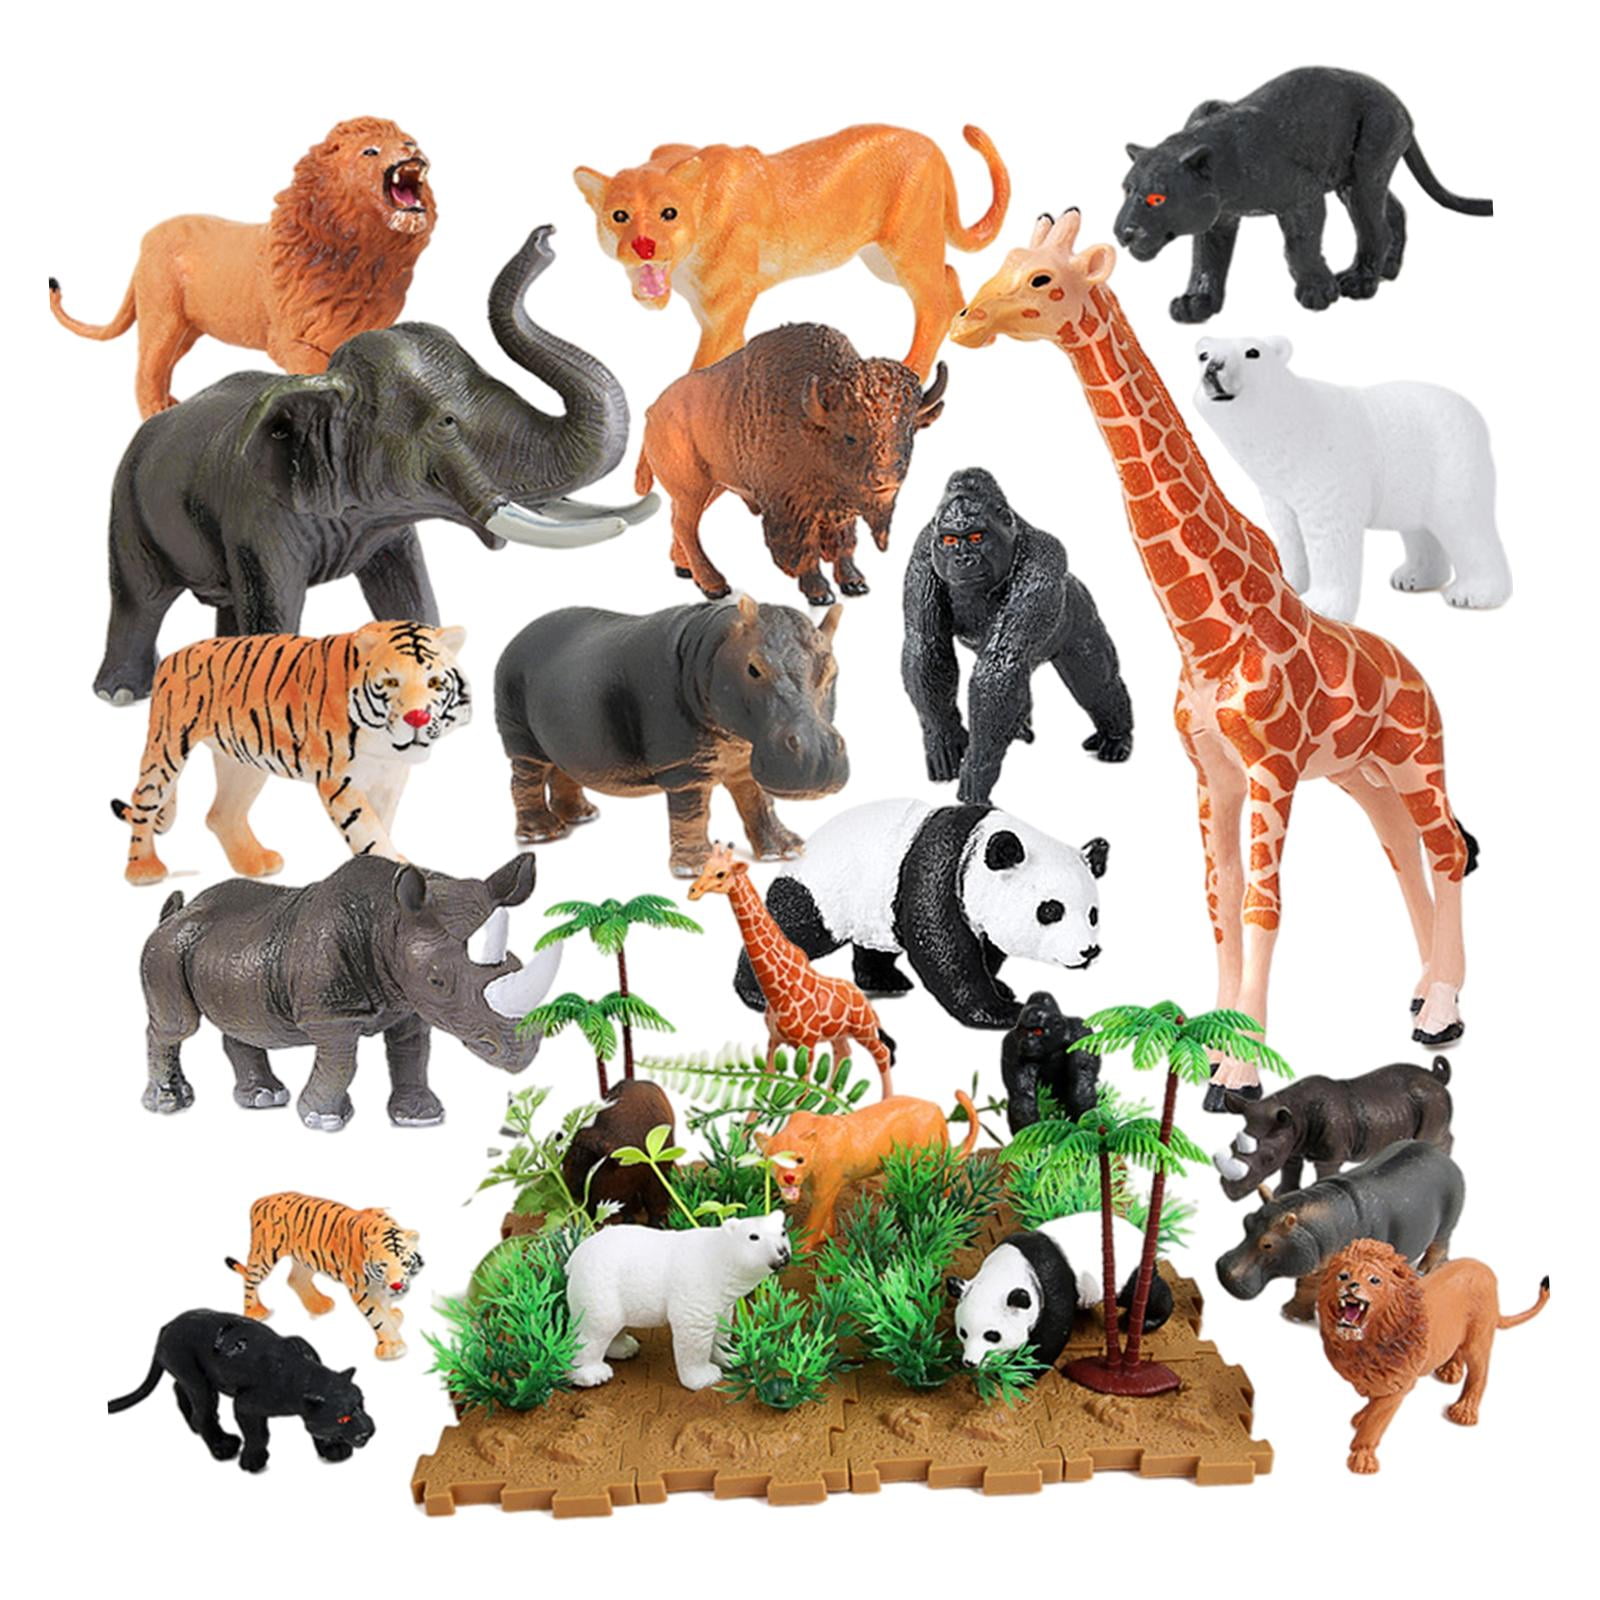 Mojo WILDLIFE SAFARI SET 6pc toy African Animal figures models NEW 